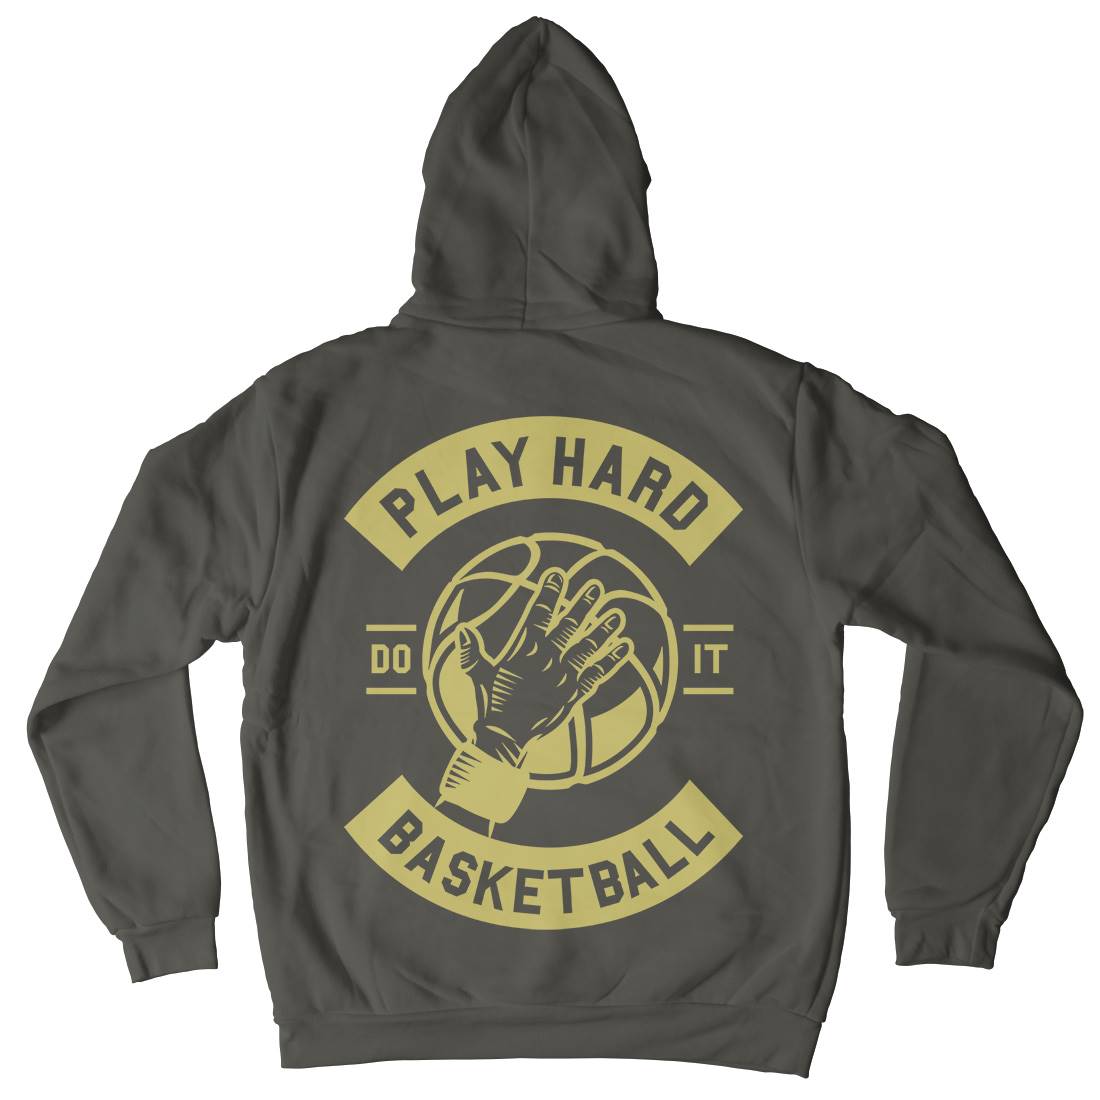 Play Hard Basketball Kids Crew Neck Hoodie Sport A261